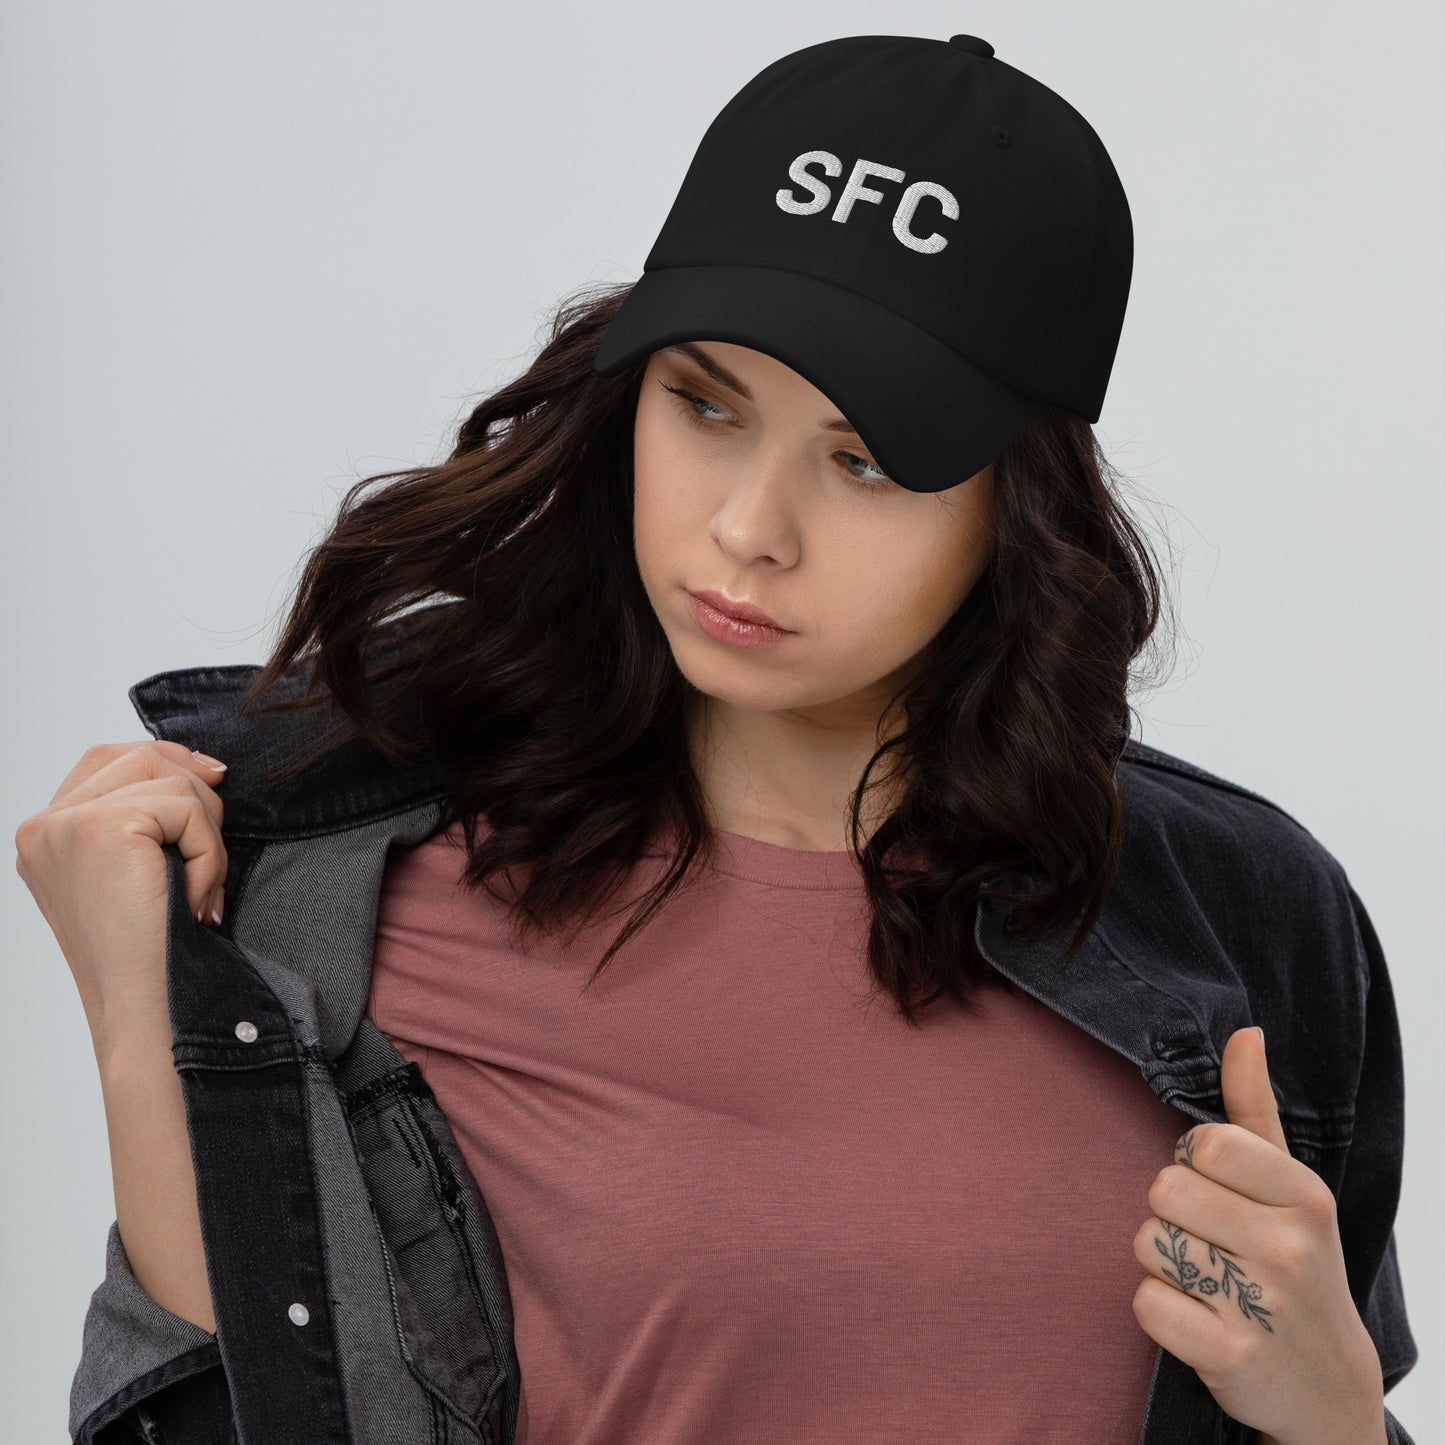 SFC Dad Hat